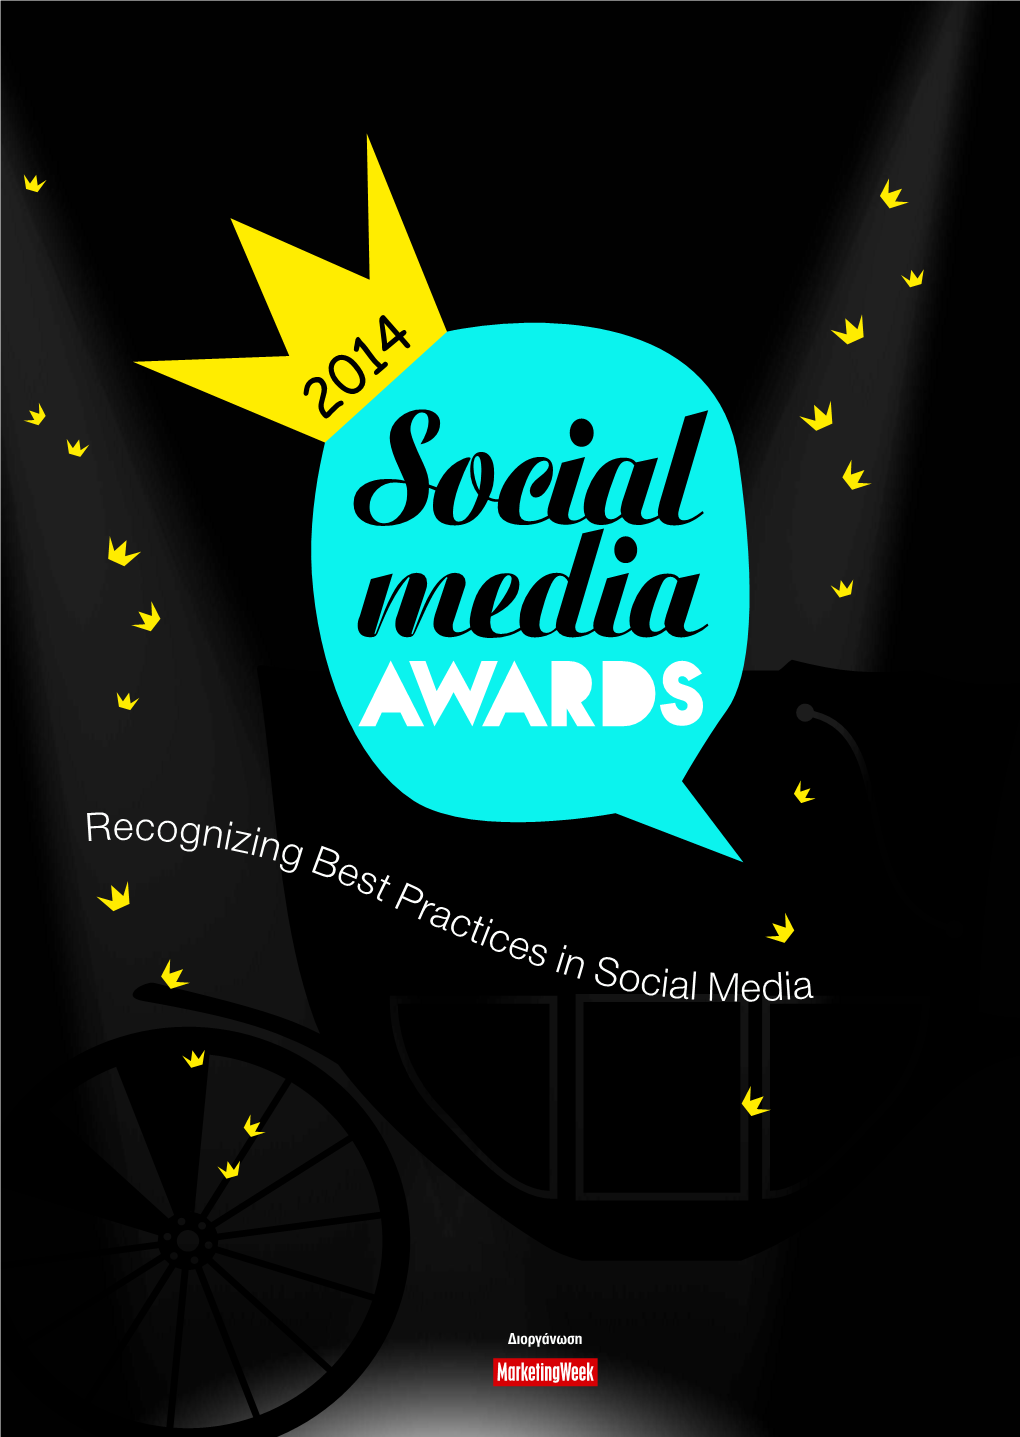 Recognizing Best Practices in Social Media